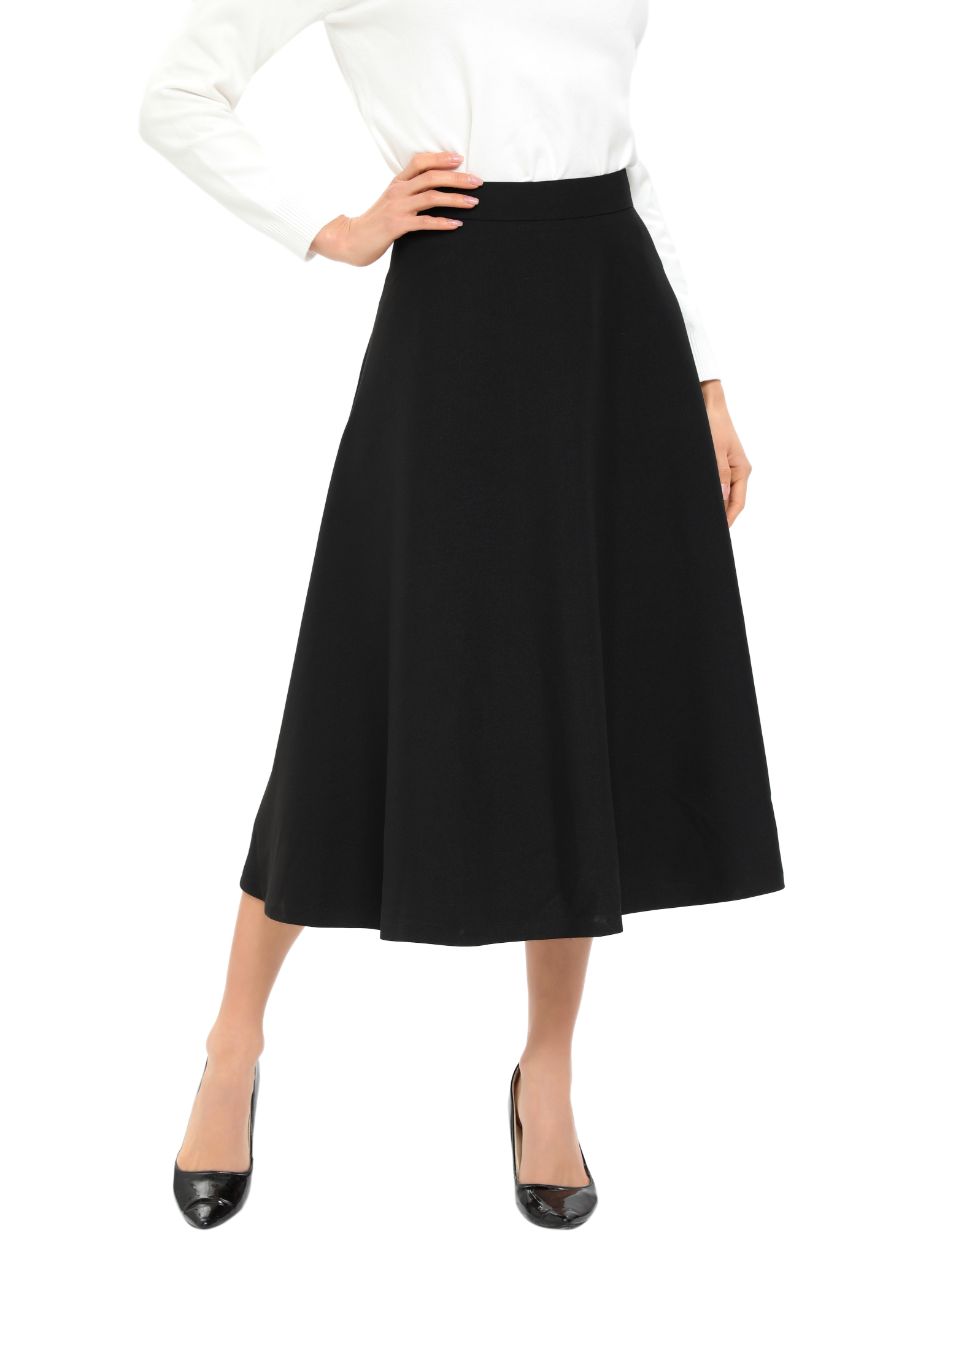 Classic Black A-Line 31 Inch Skirt